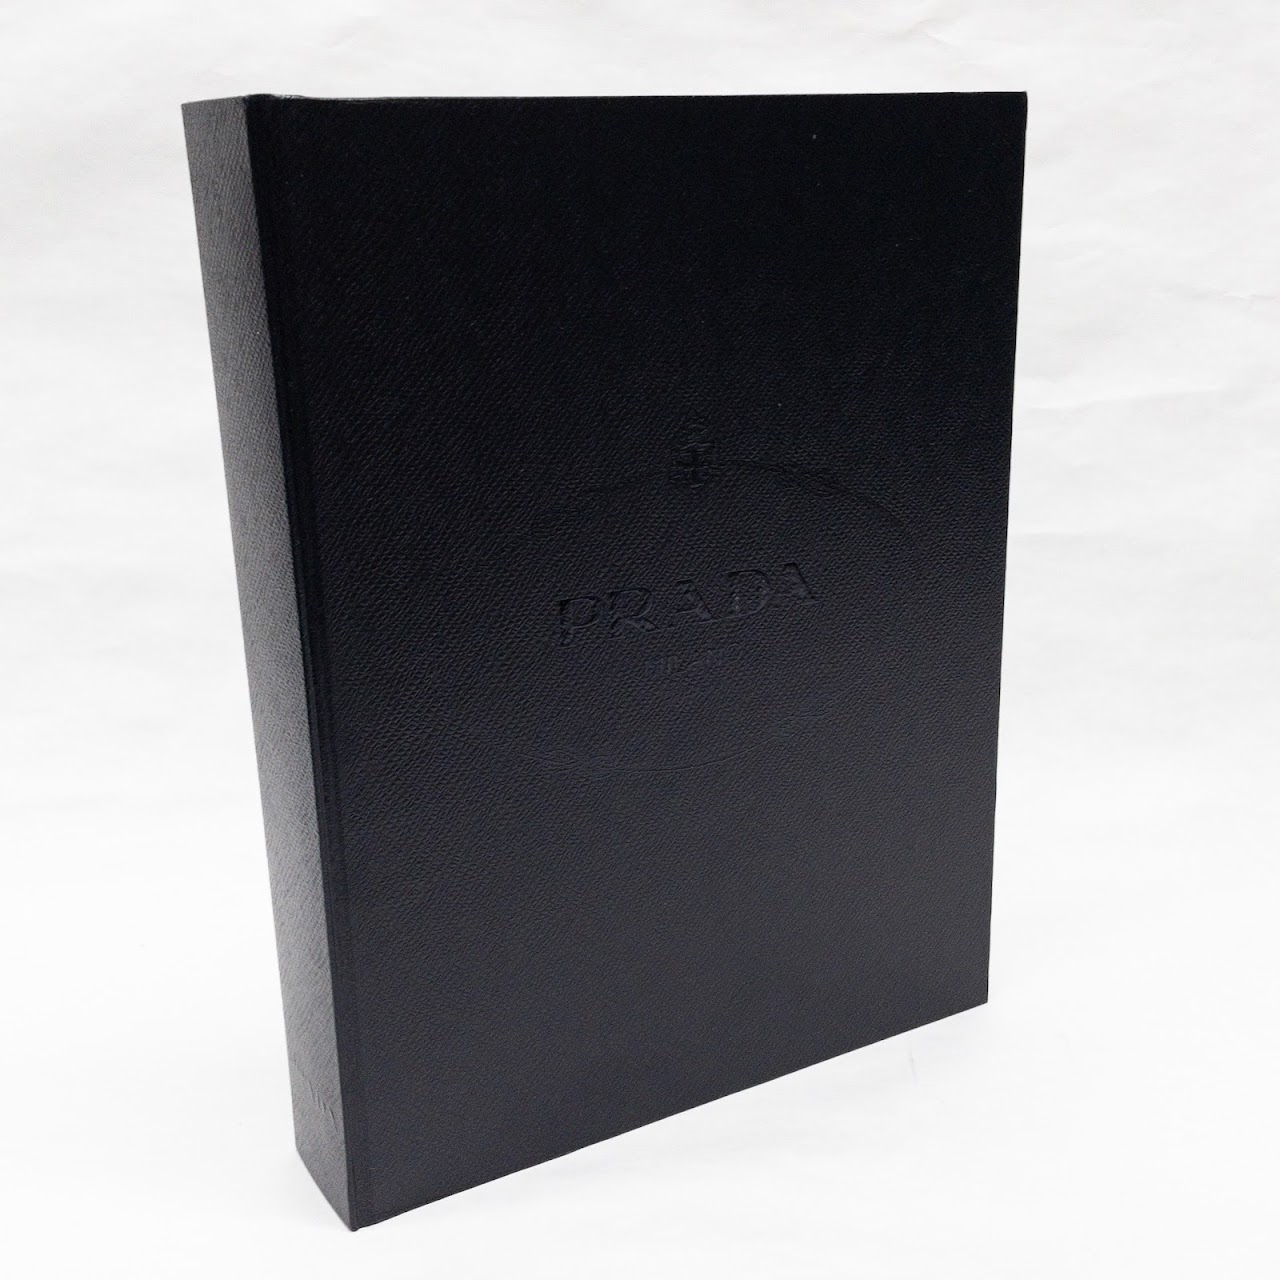 Prada Milano First Edition Book